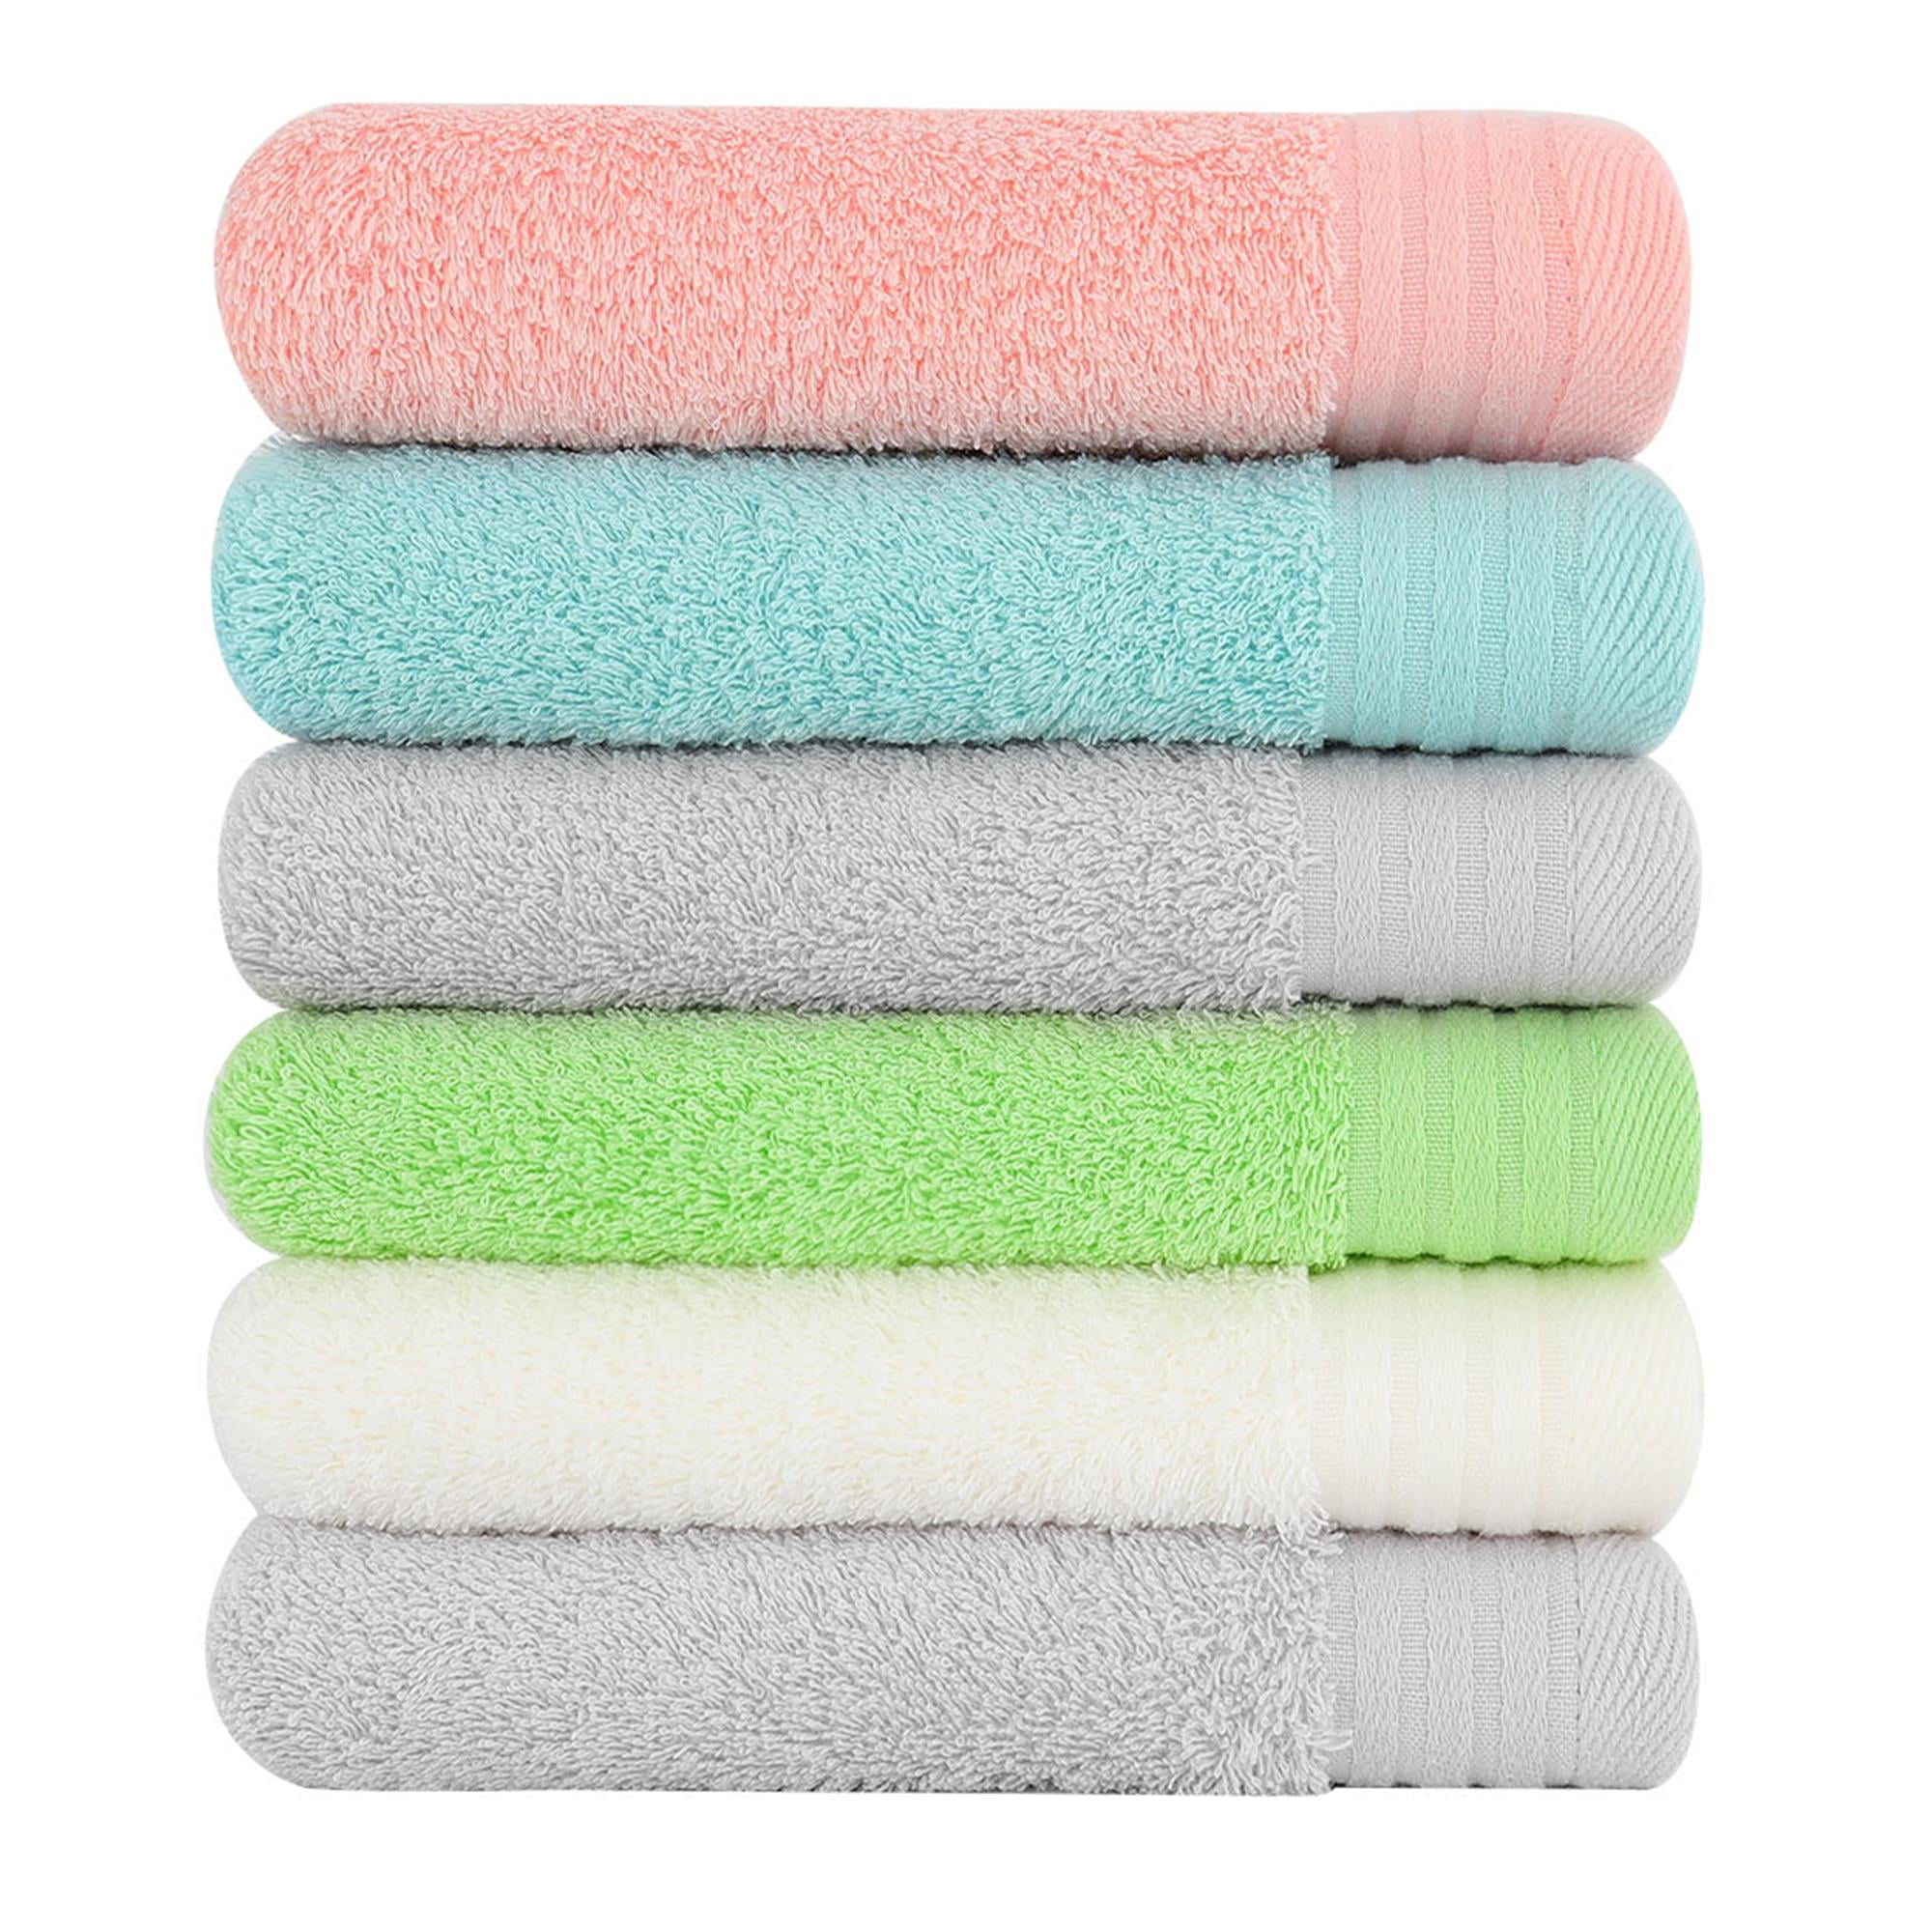 Pinzon Luxury Certified Organic Hand Towels, 6-Pack